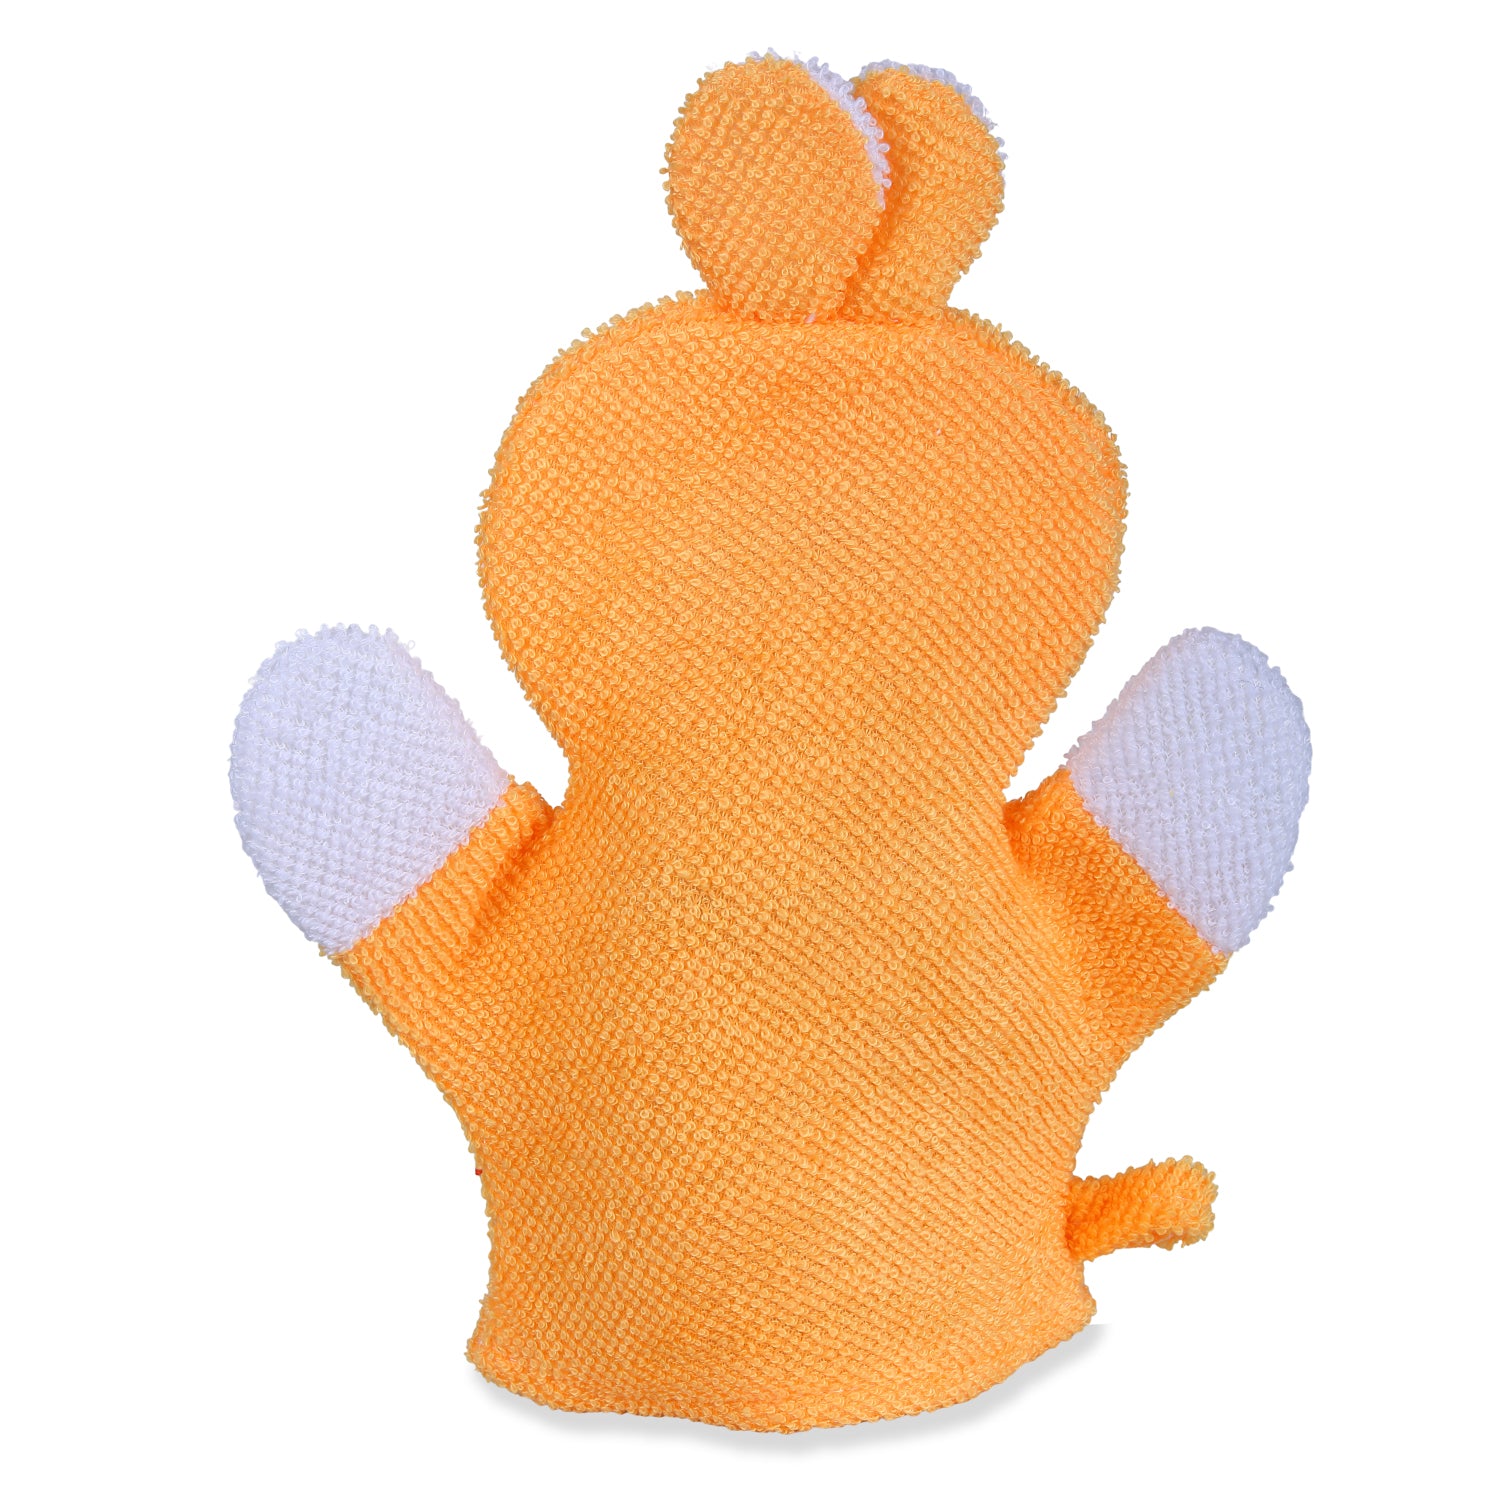 Baby Moo Cute Puppy Bath Time Fun Hand Puppet Loofah Bath Glove - Orange